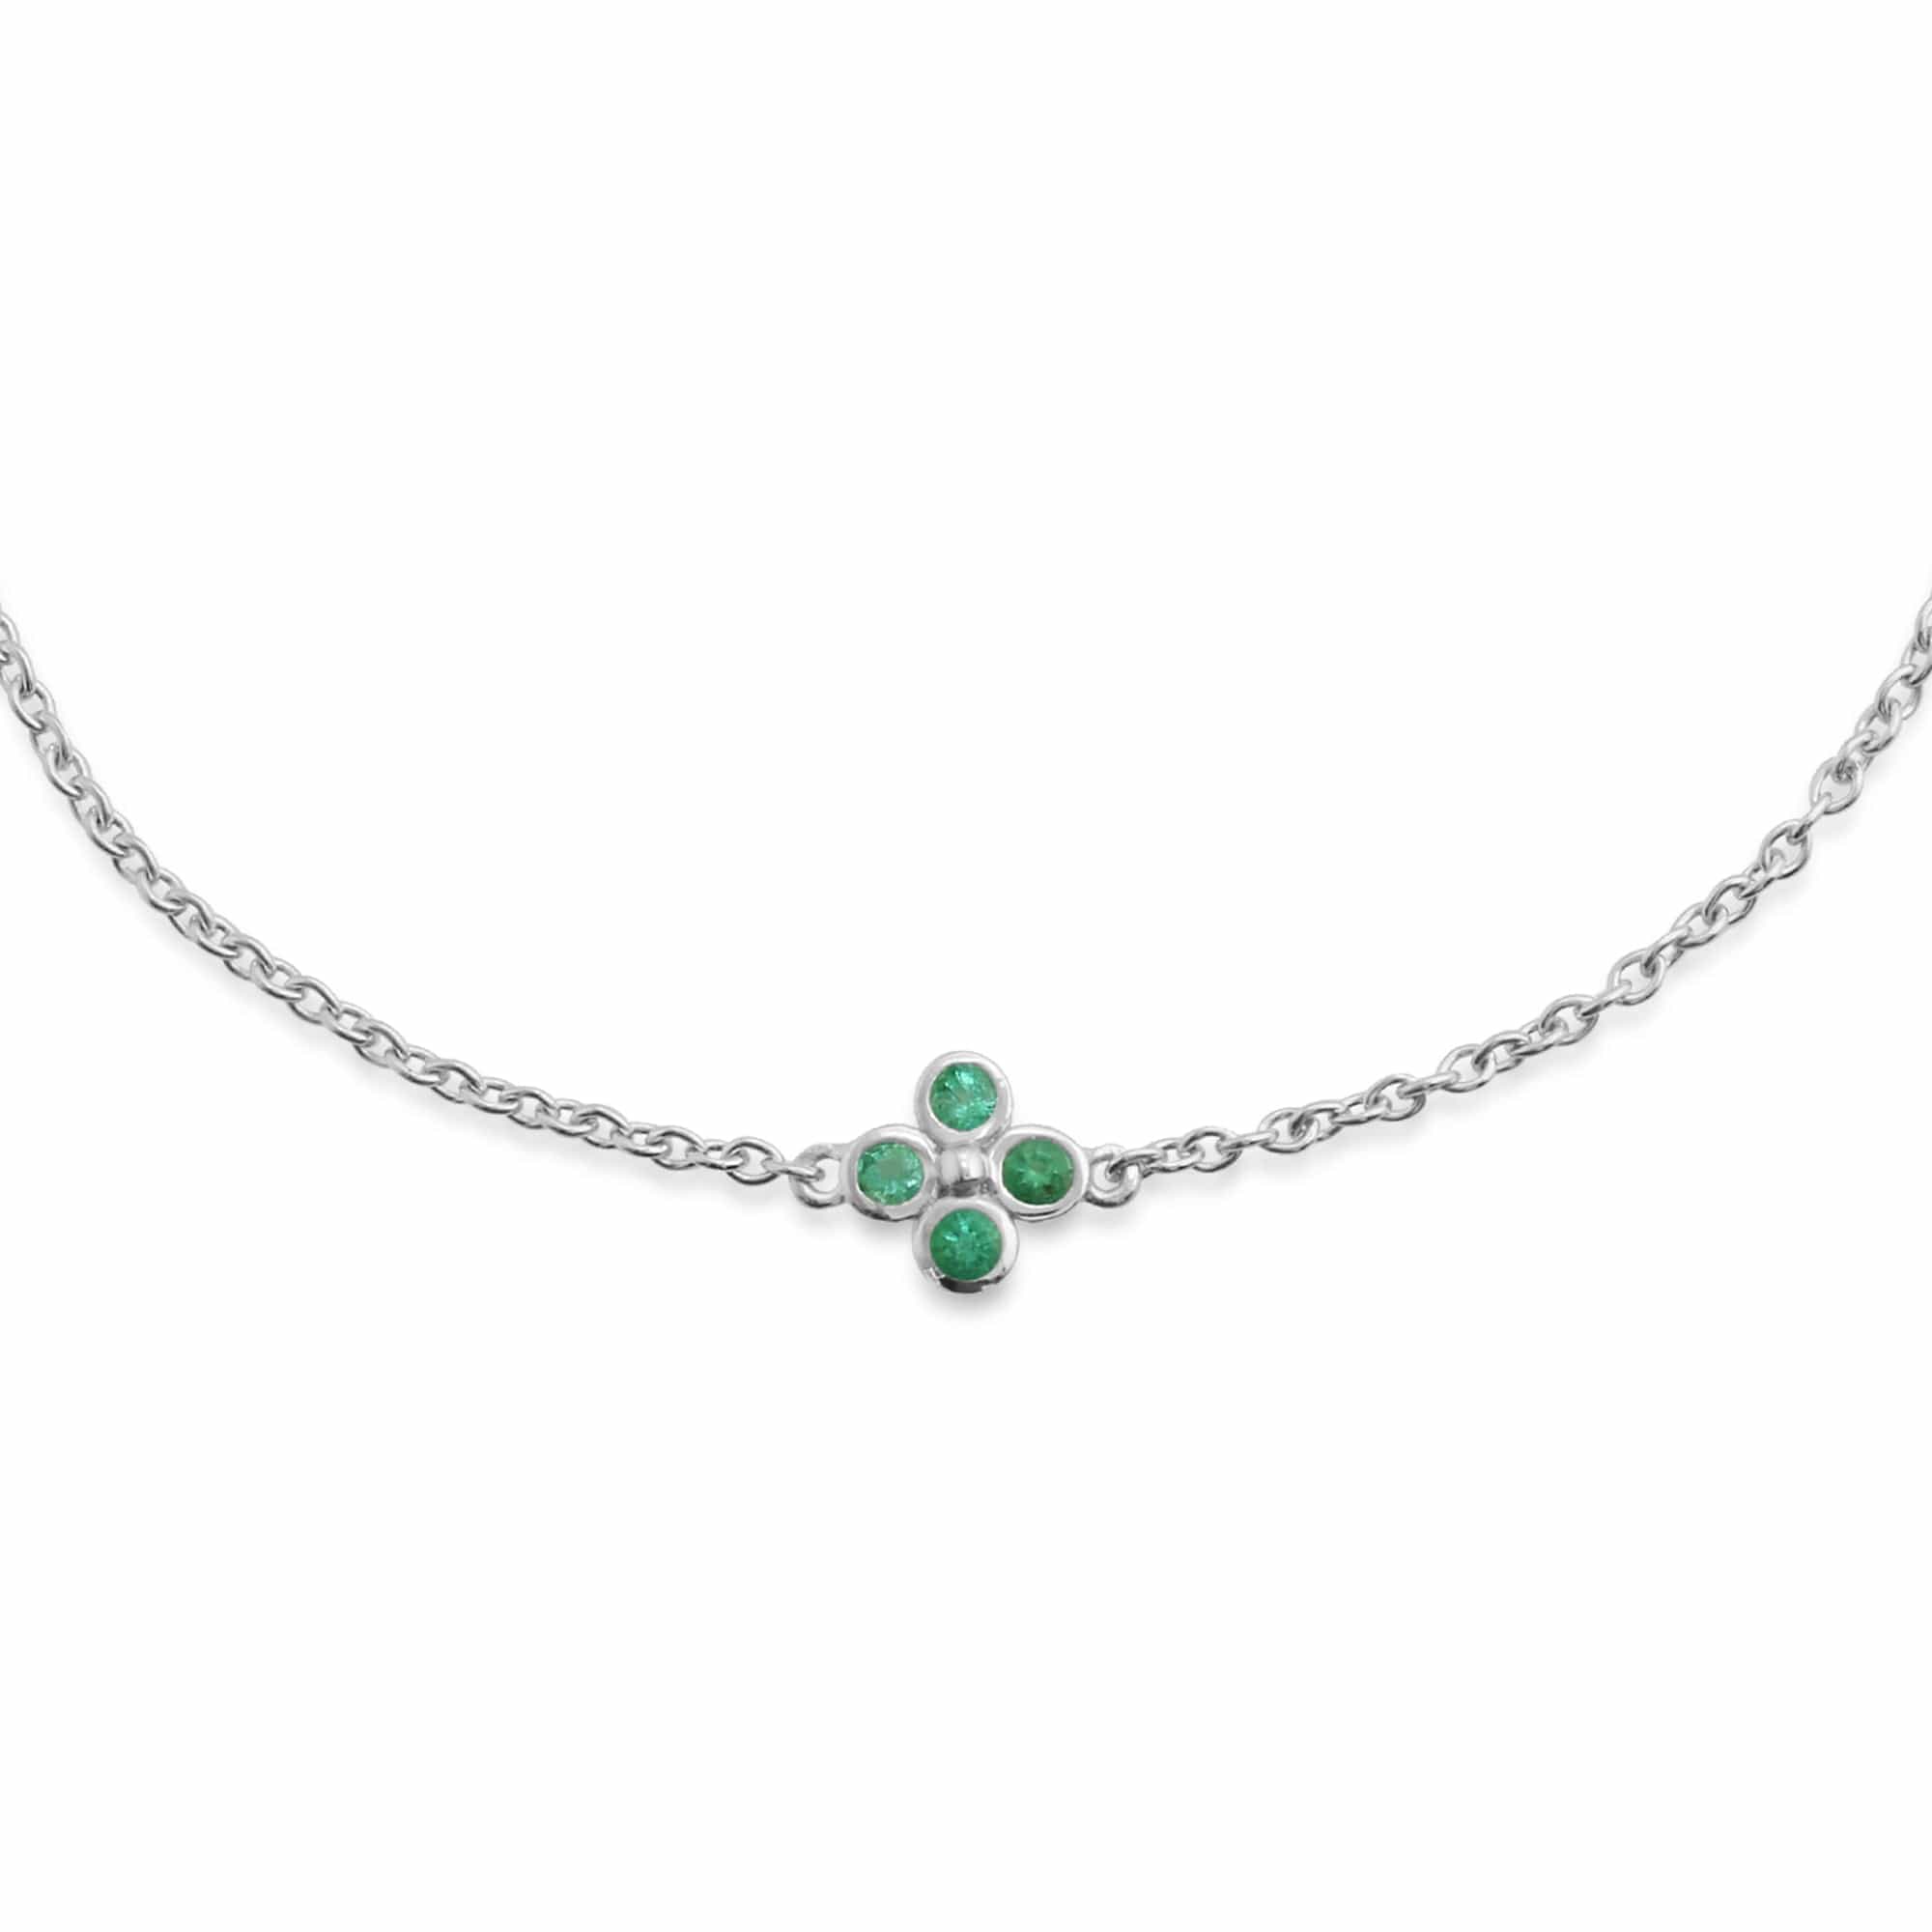 Floral Round Emerald Clover Stud Earrings & Bracelet Set in 925 Sterling Silver - Gemondo